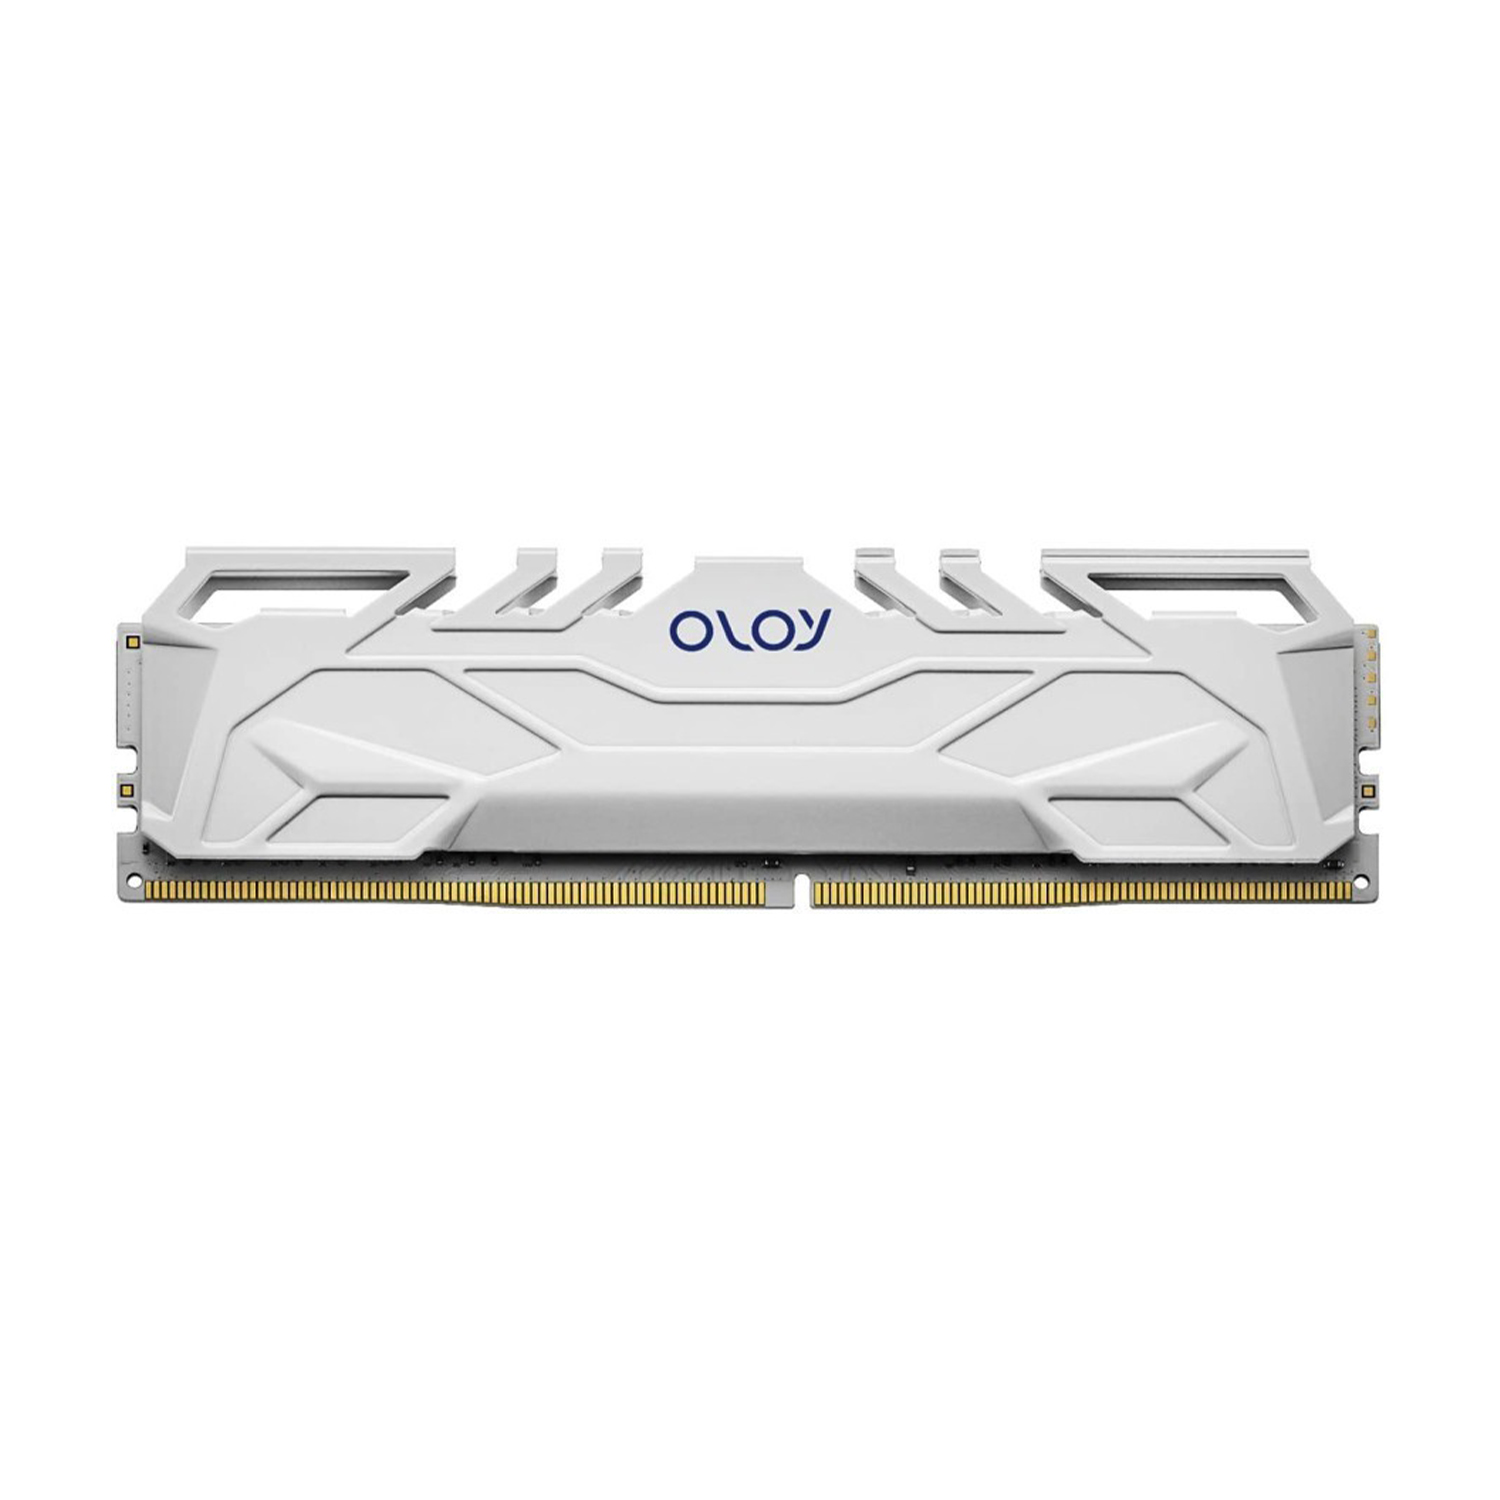 RAM (แรมพีซี) OLOY OWL WHITE 8GB DDR4 3200MHz